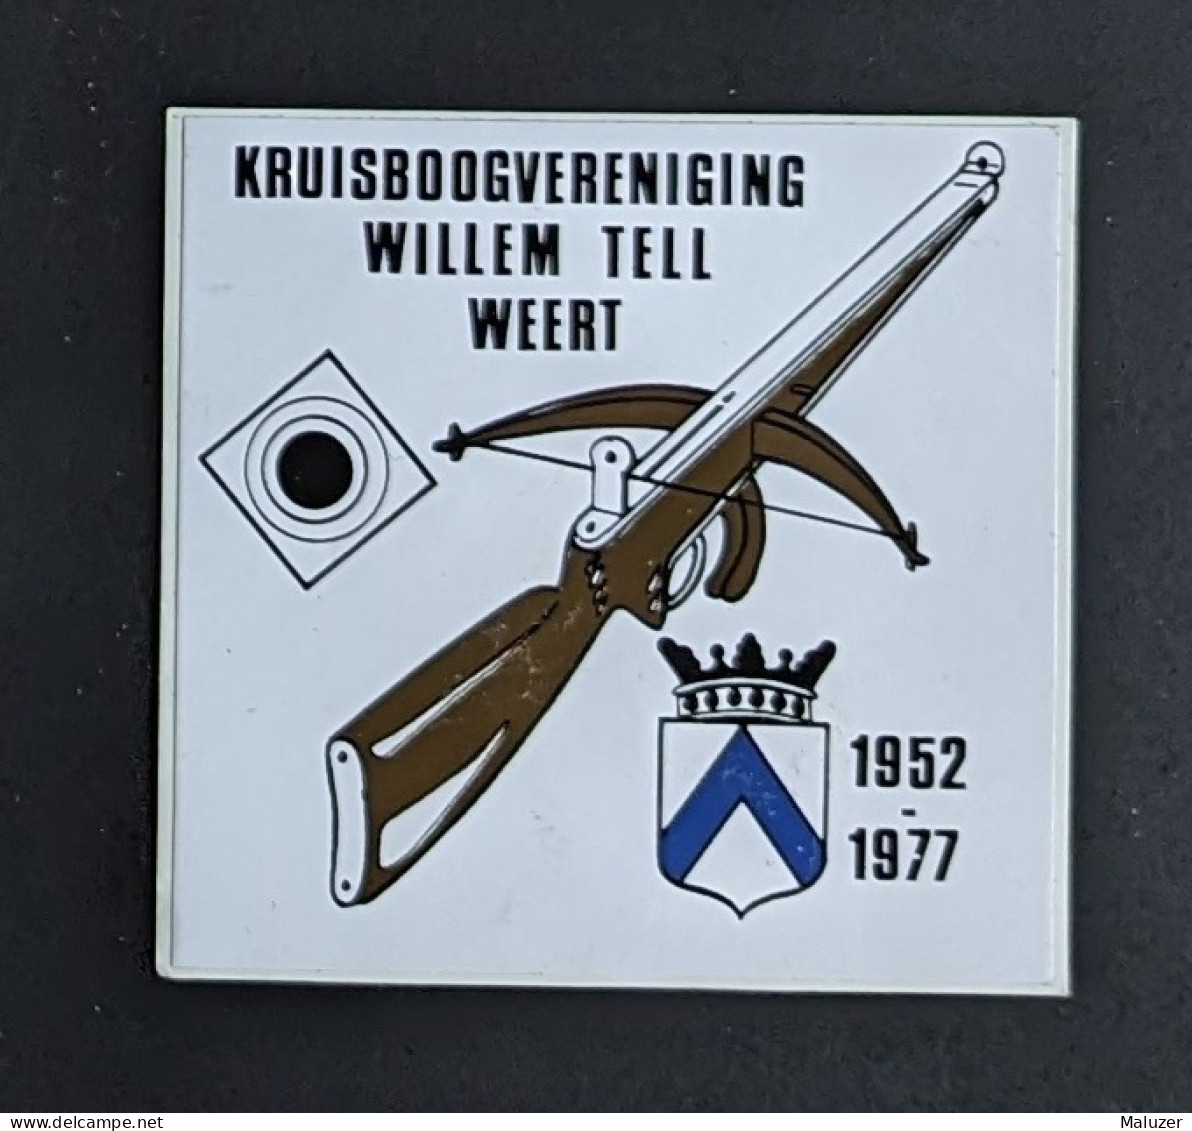 AUTOCOLLANT KRUISBOOGVERENIGING WILLEM TELL - WEERT - 1952 1977 - PAYS-BAS NEDERLAND - SPORT  - CLUB TIR ARMES ARBALÈTE - Adesivi